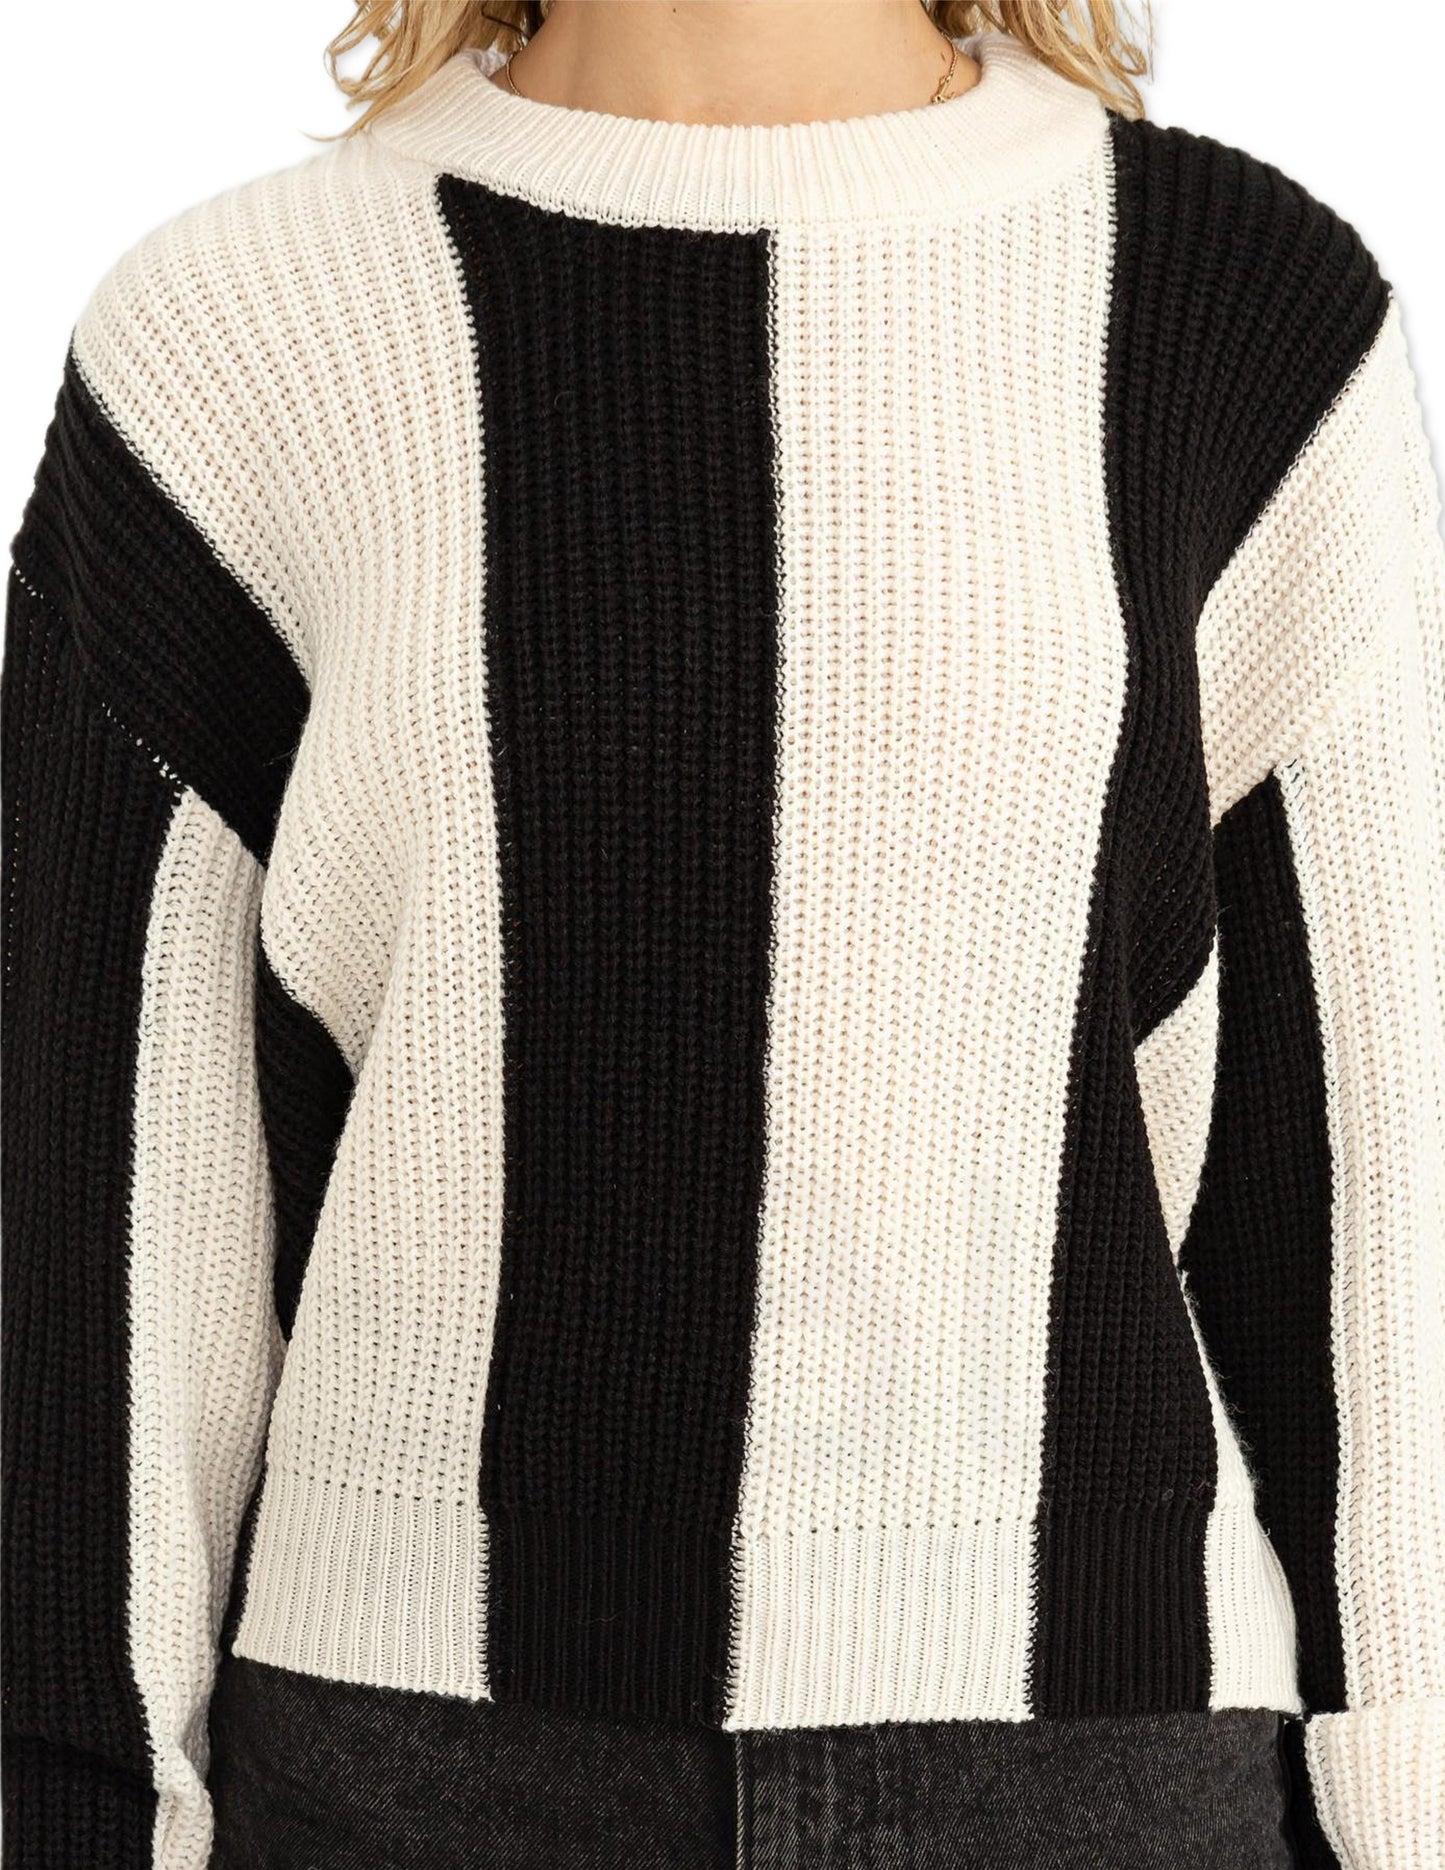 Vertical Stripe Sweater - Black and Cream